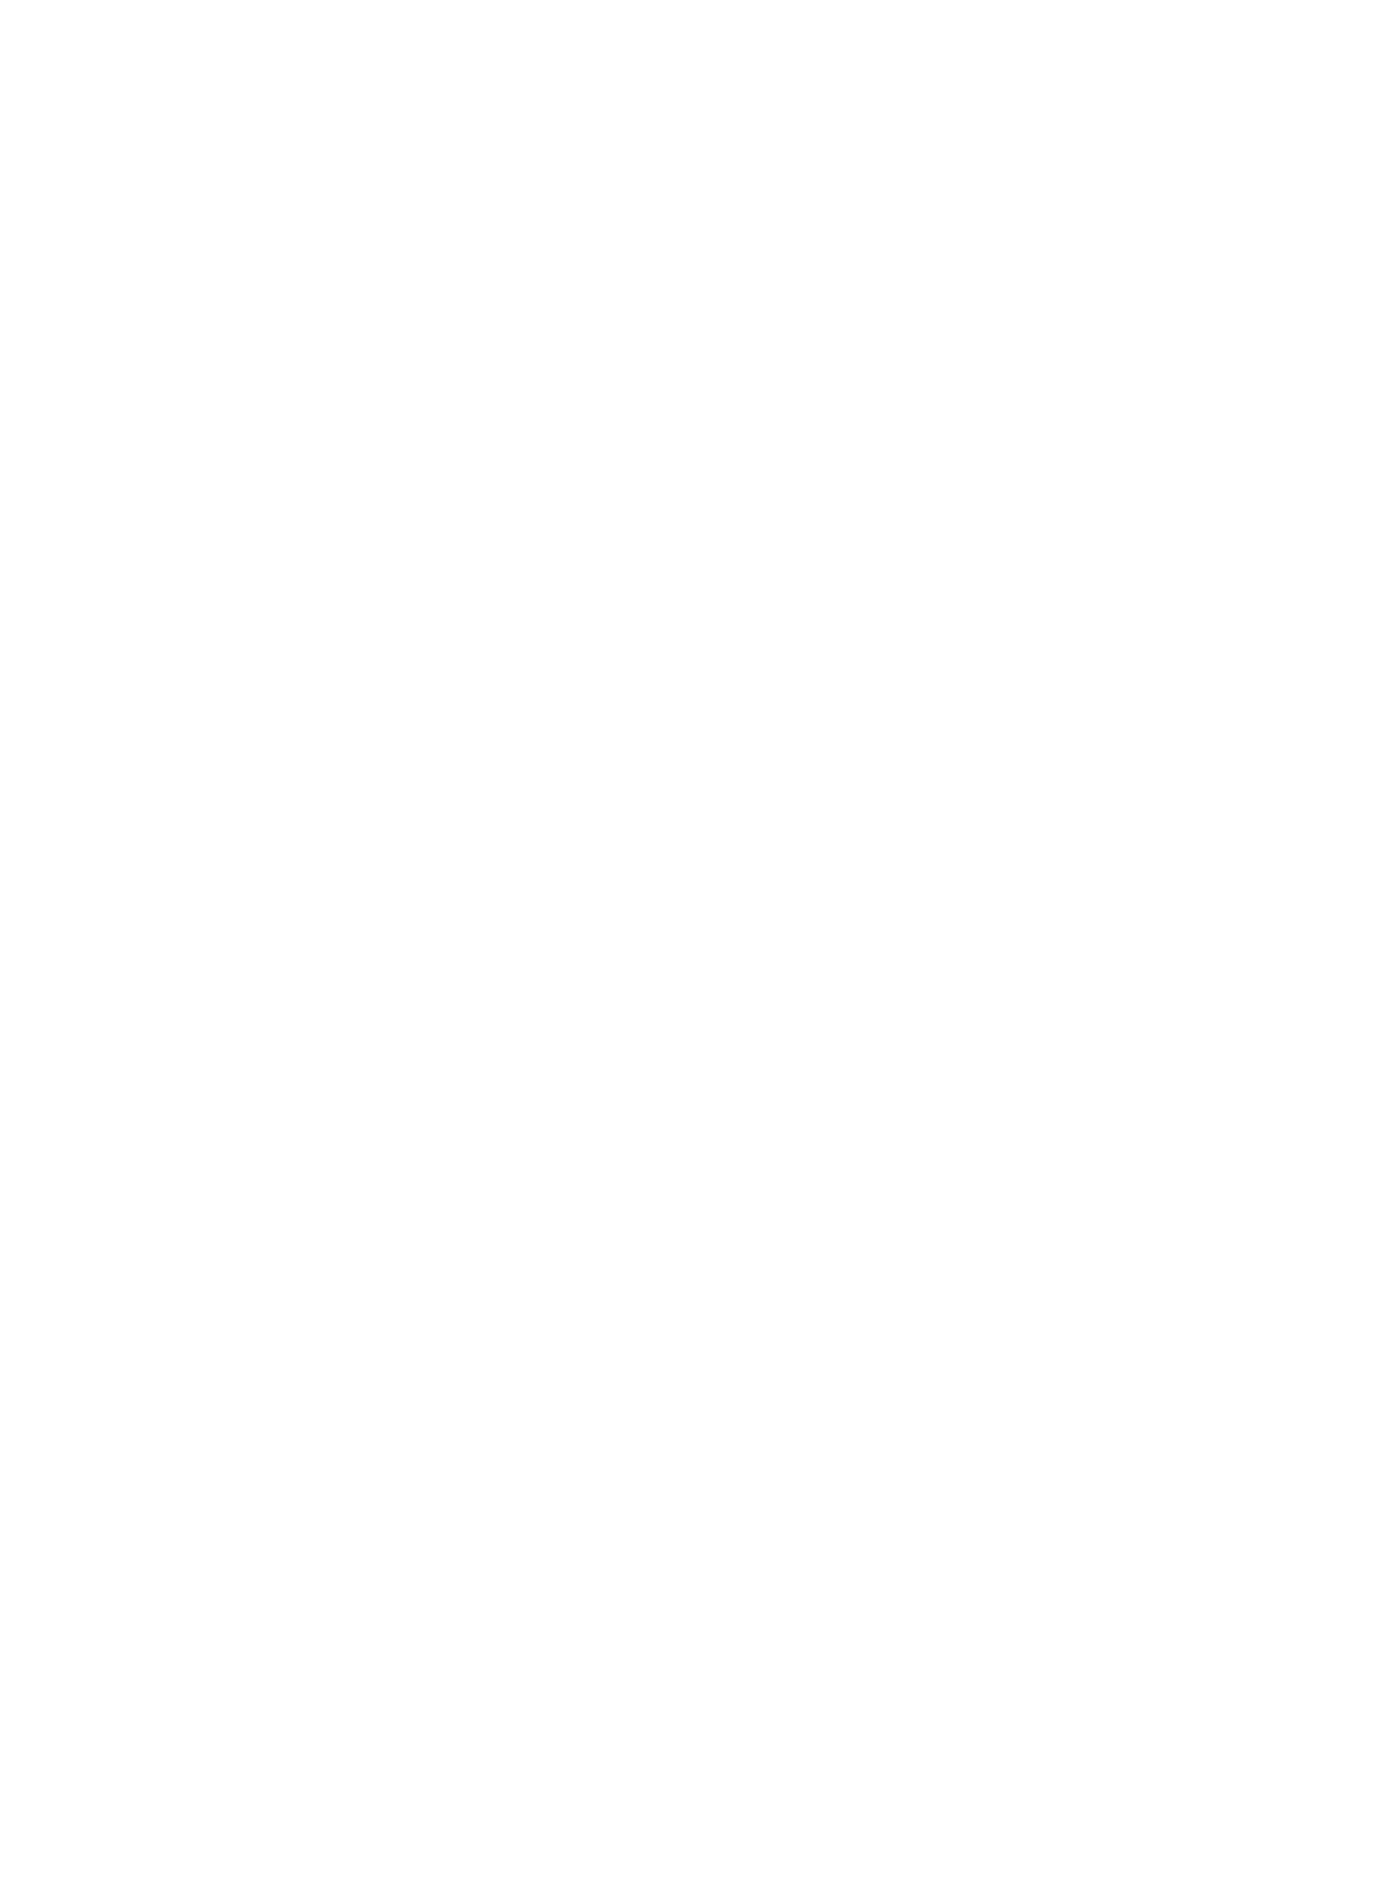 米屋 RICE HOUSE